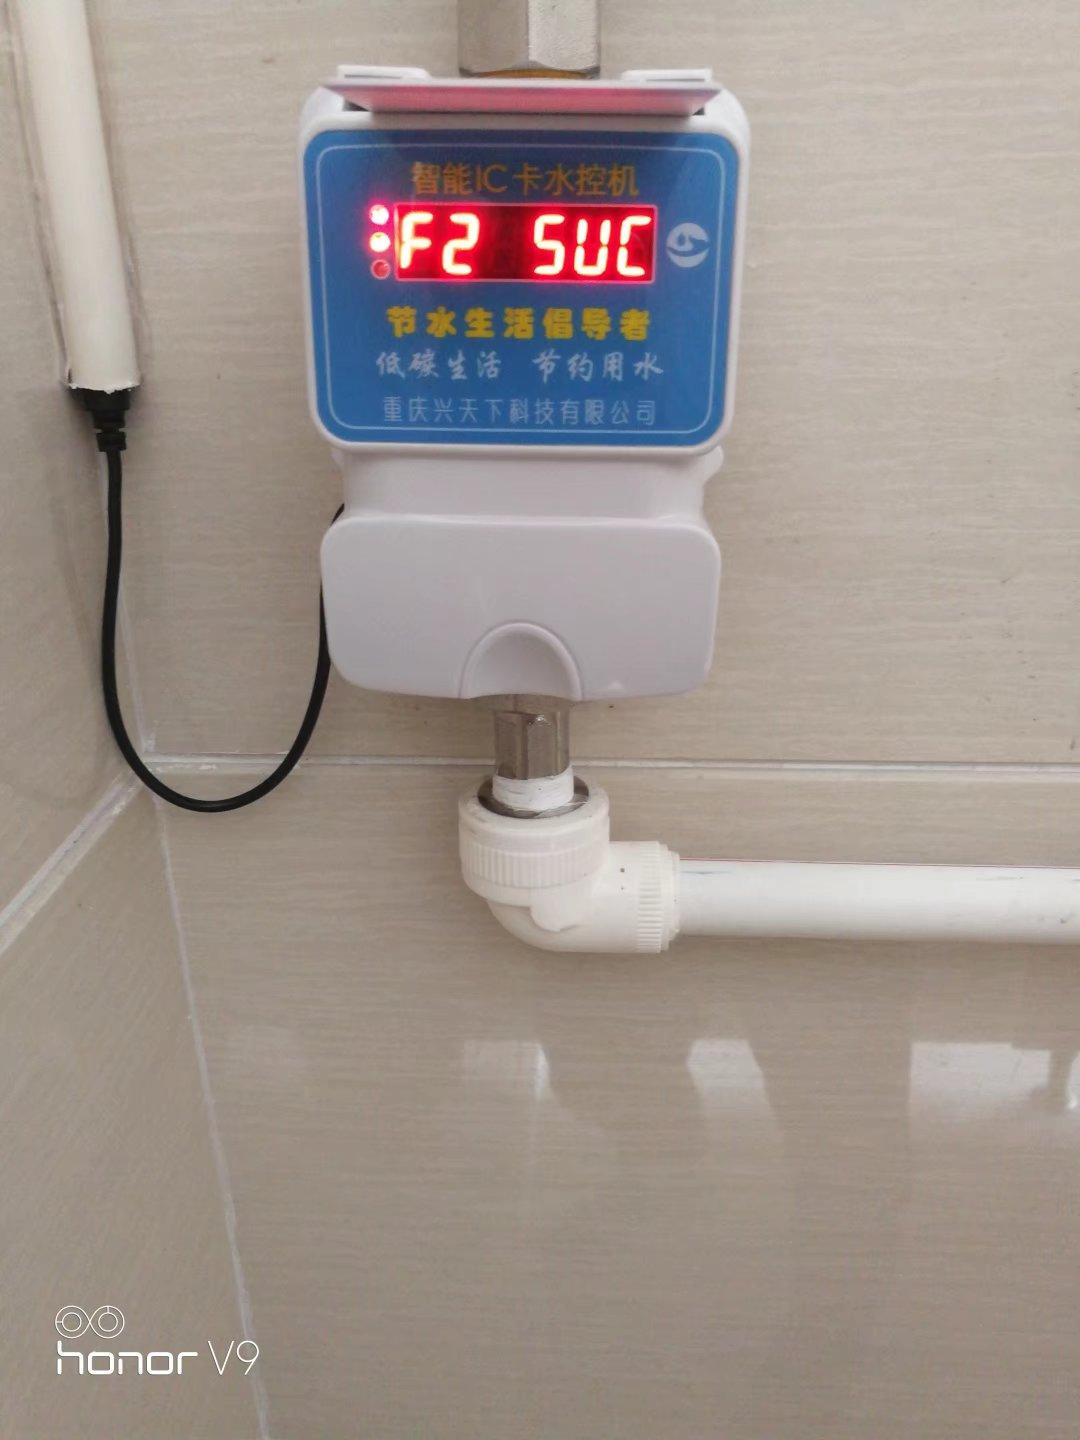 IC卡一体水控机 浴室淋浴刷卡水控机HF-660L